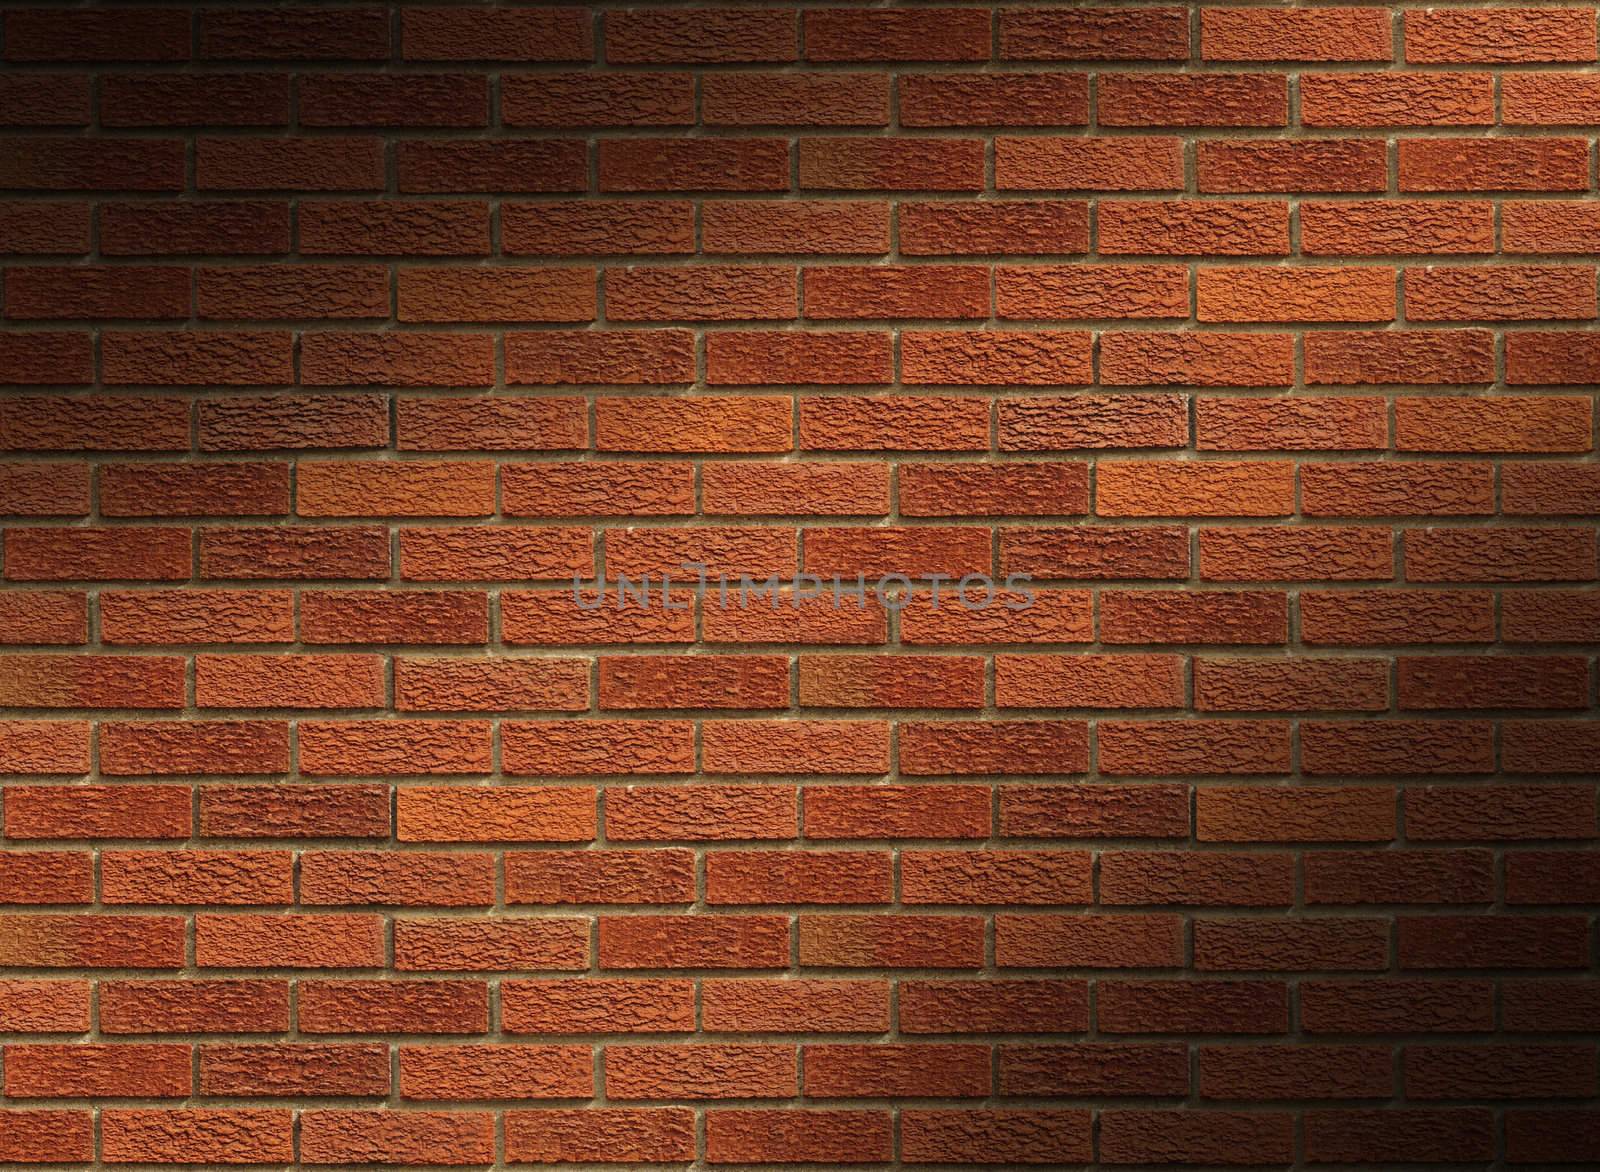 Red brick wall background lit diagonally Horizontal